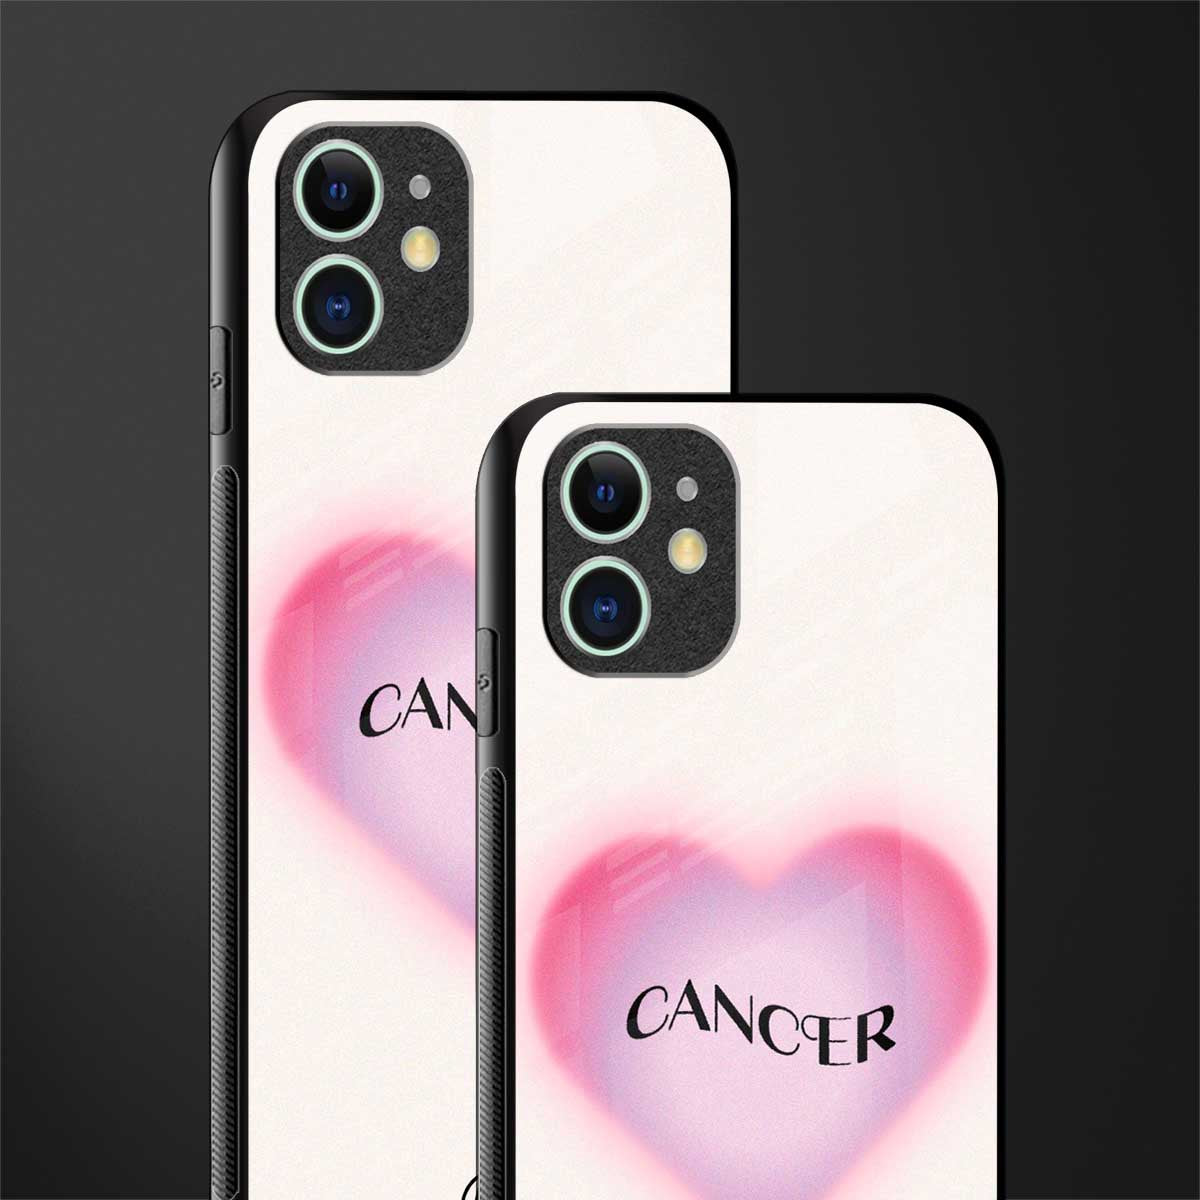 cancer minimalistic glass case for iphone 12 mini image-2